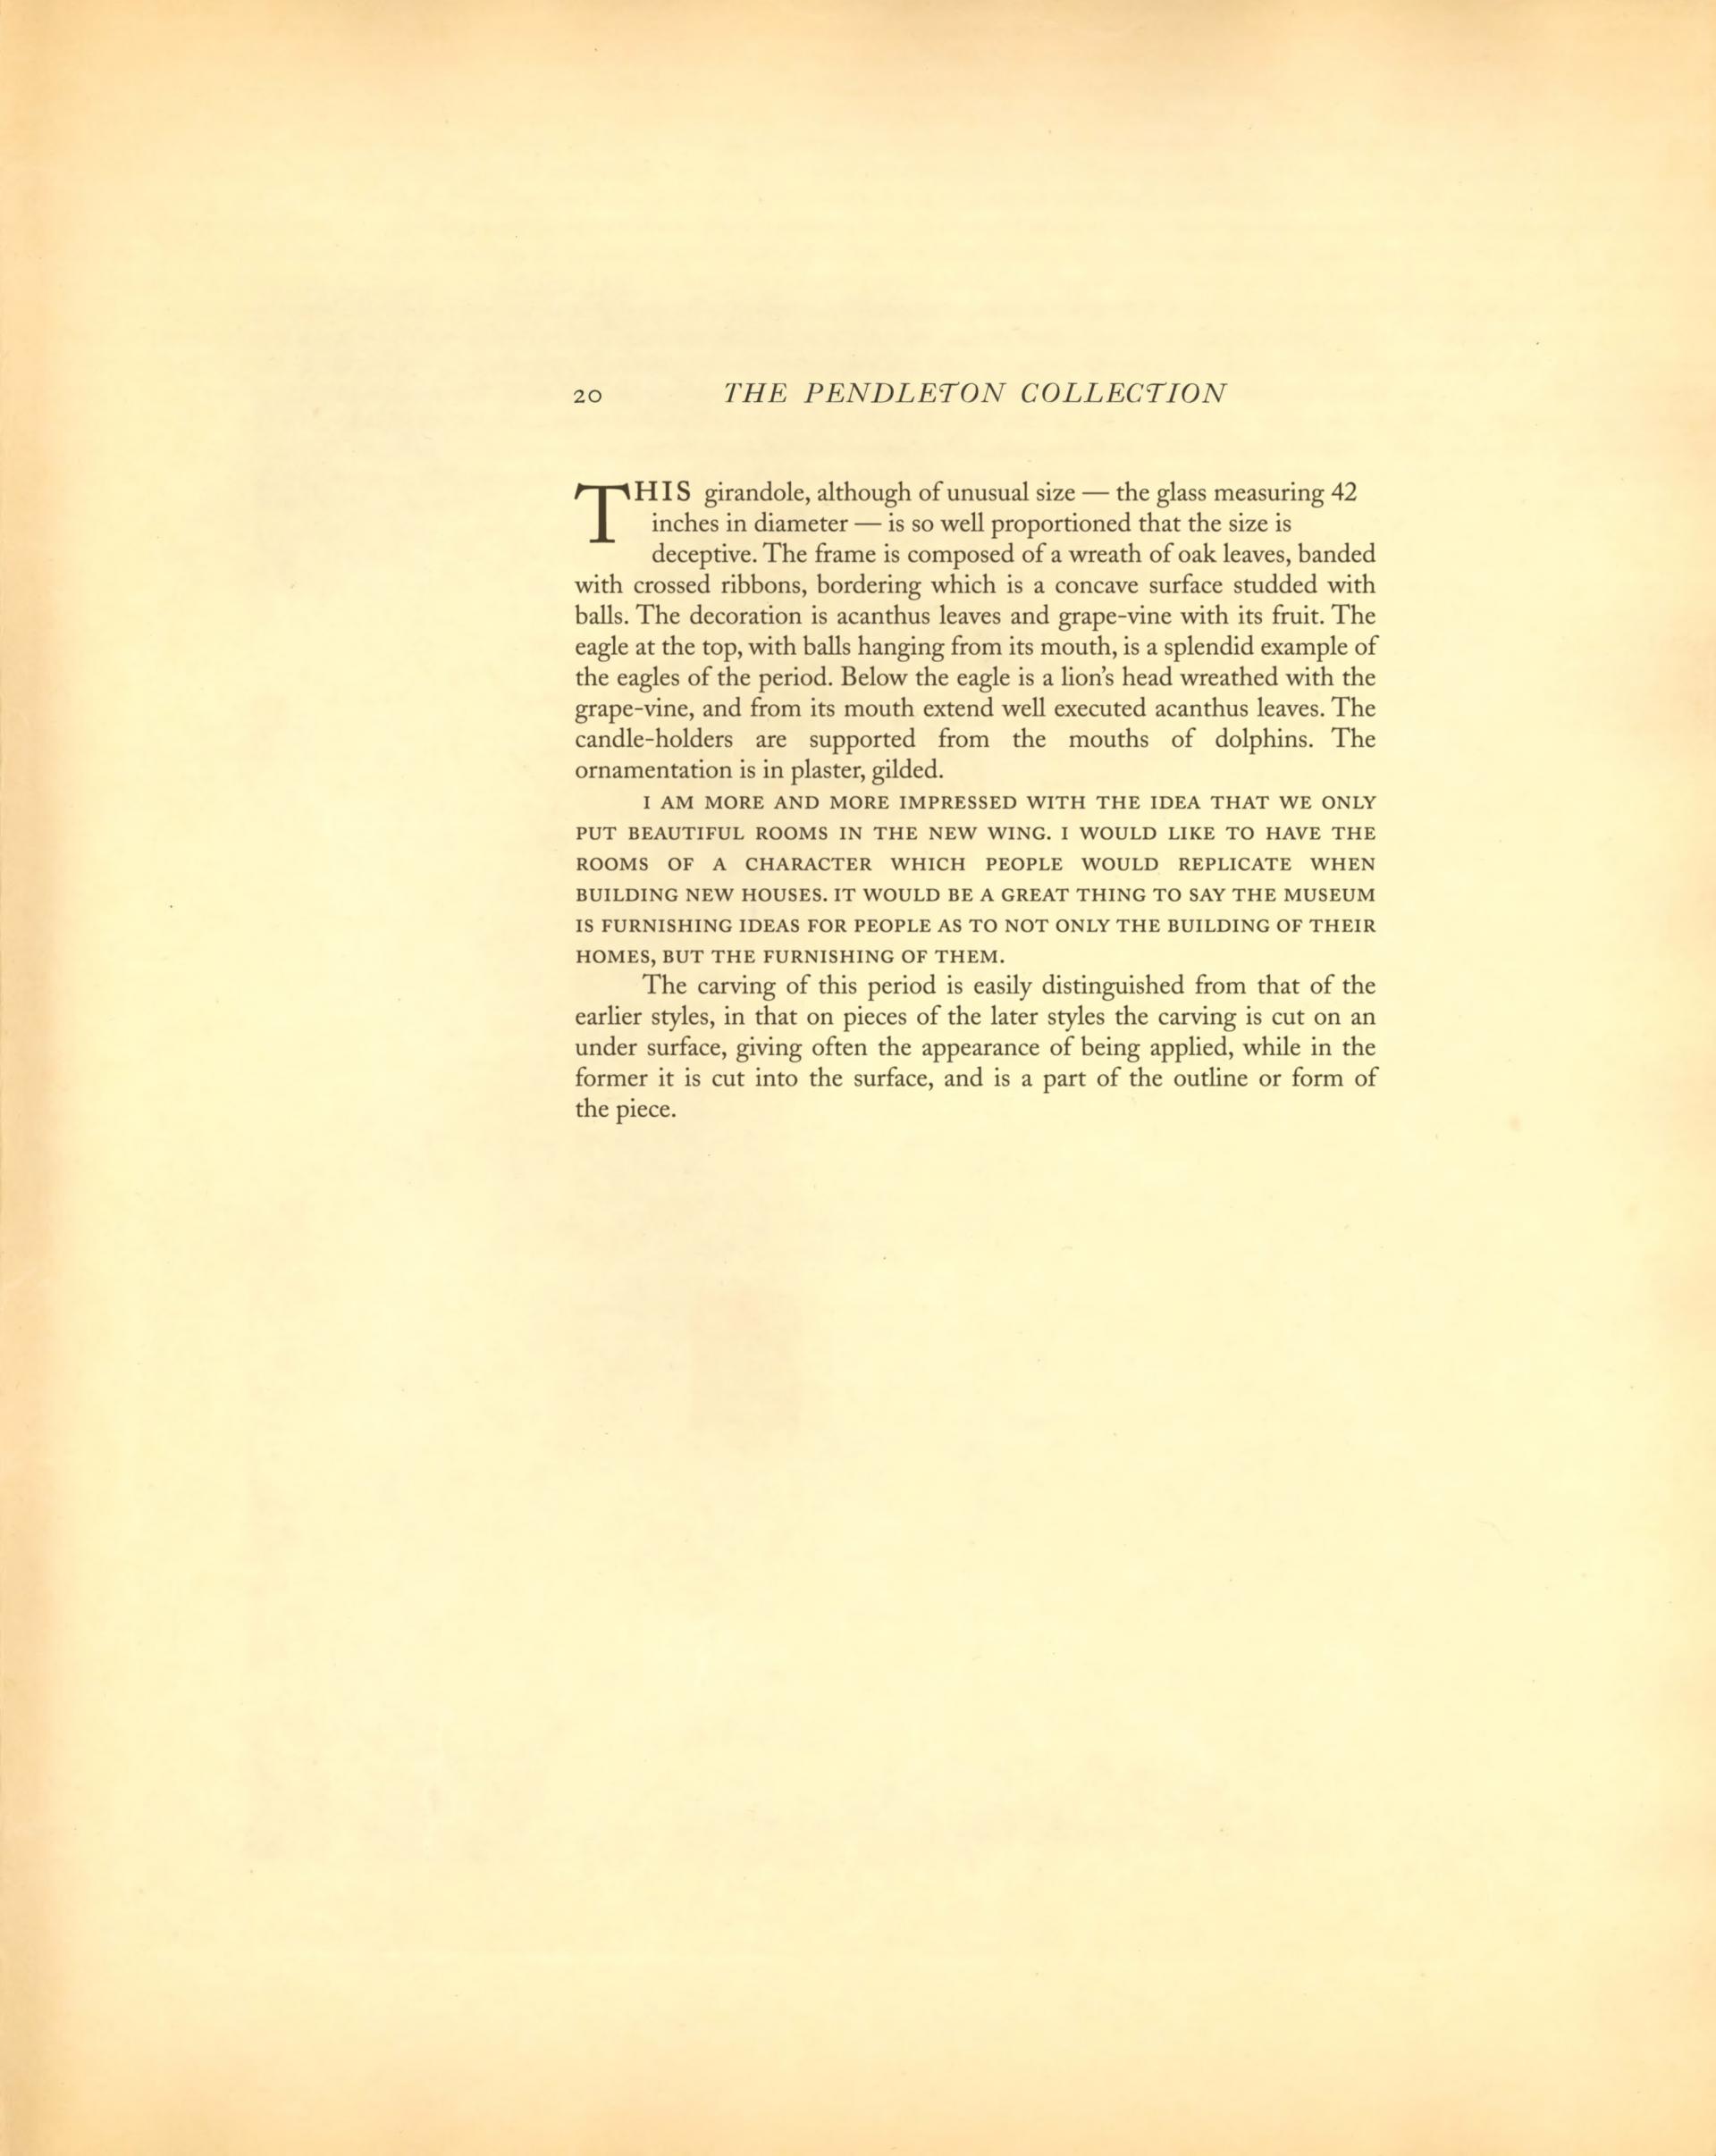 Pendleton Collection Catalog Page: text describing a mirror with an ornate frame